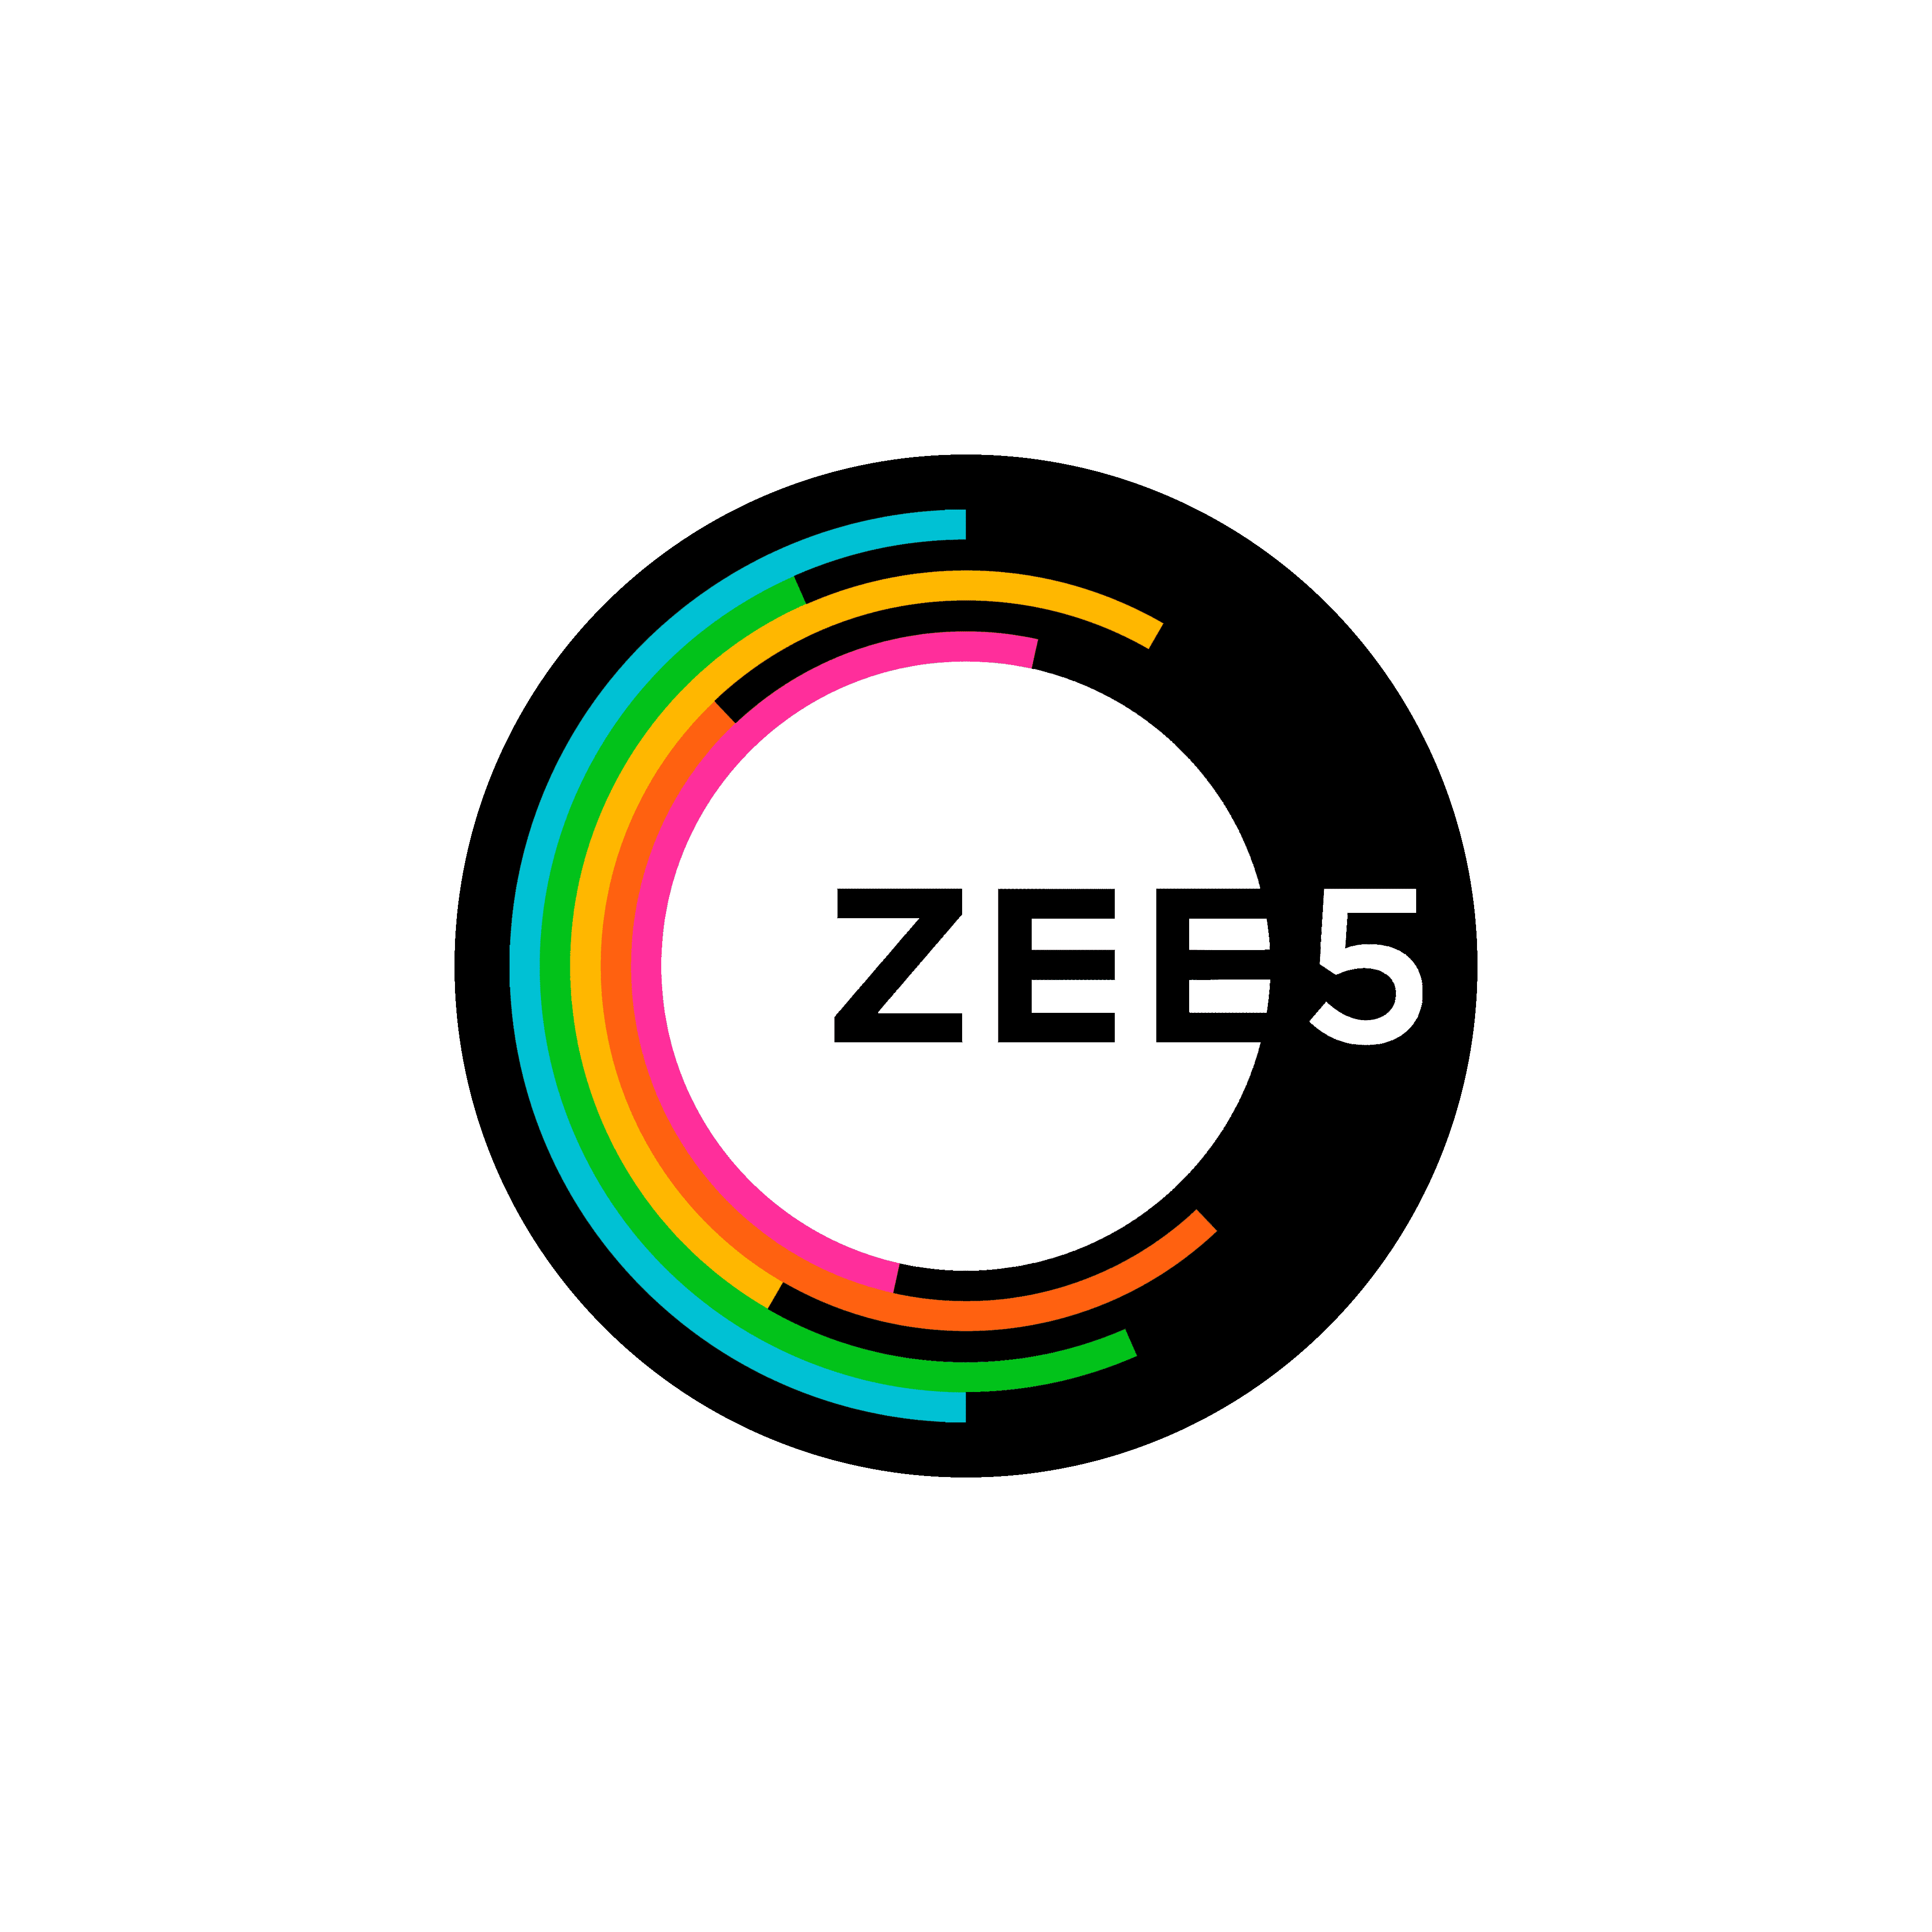 Zee5 Transparent Image